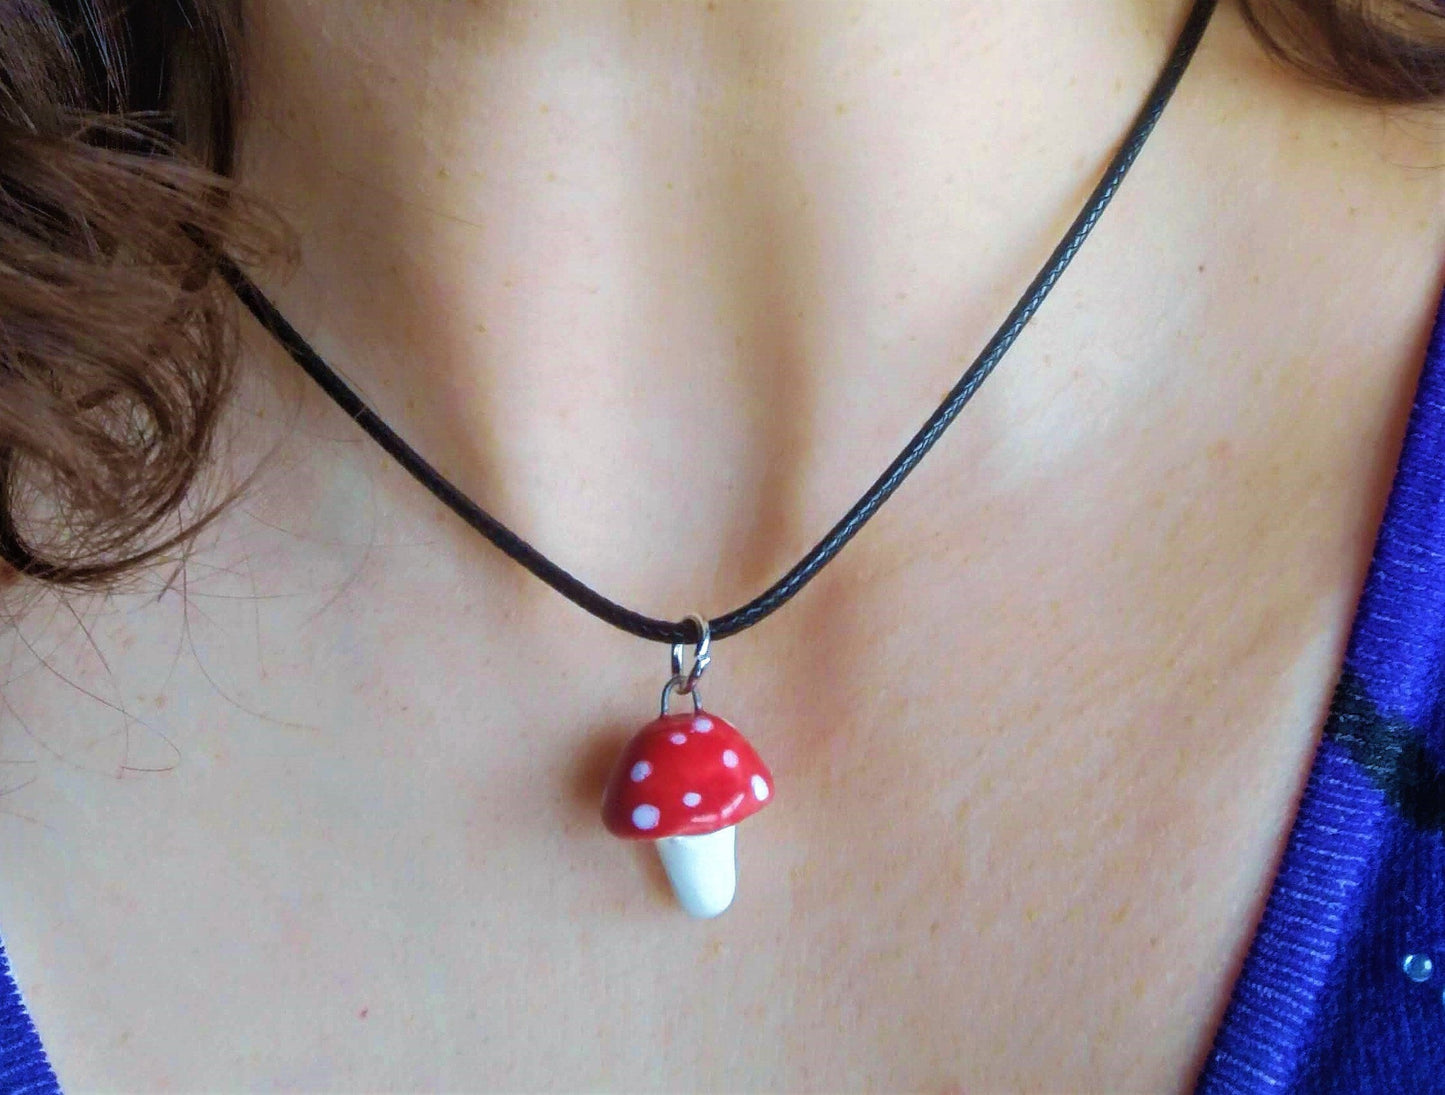 Handmade Ceramic Red Mushroom Necklace Pendant For Women, Dainty Cottagecore Necklace For Her Artisan Jewelry Birthday Gift Idea W/ Gift Box - Ceramica Ana Rafael